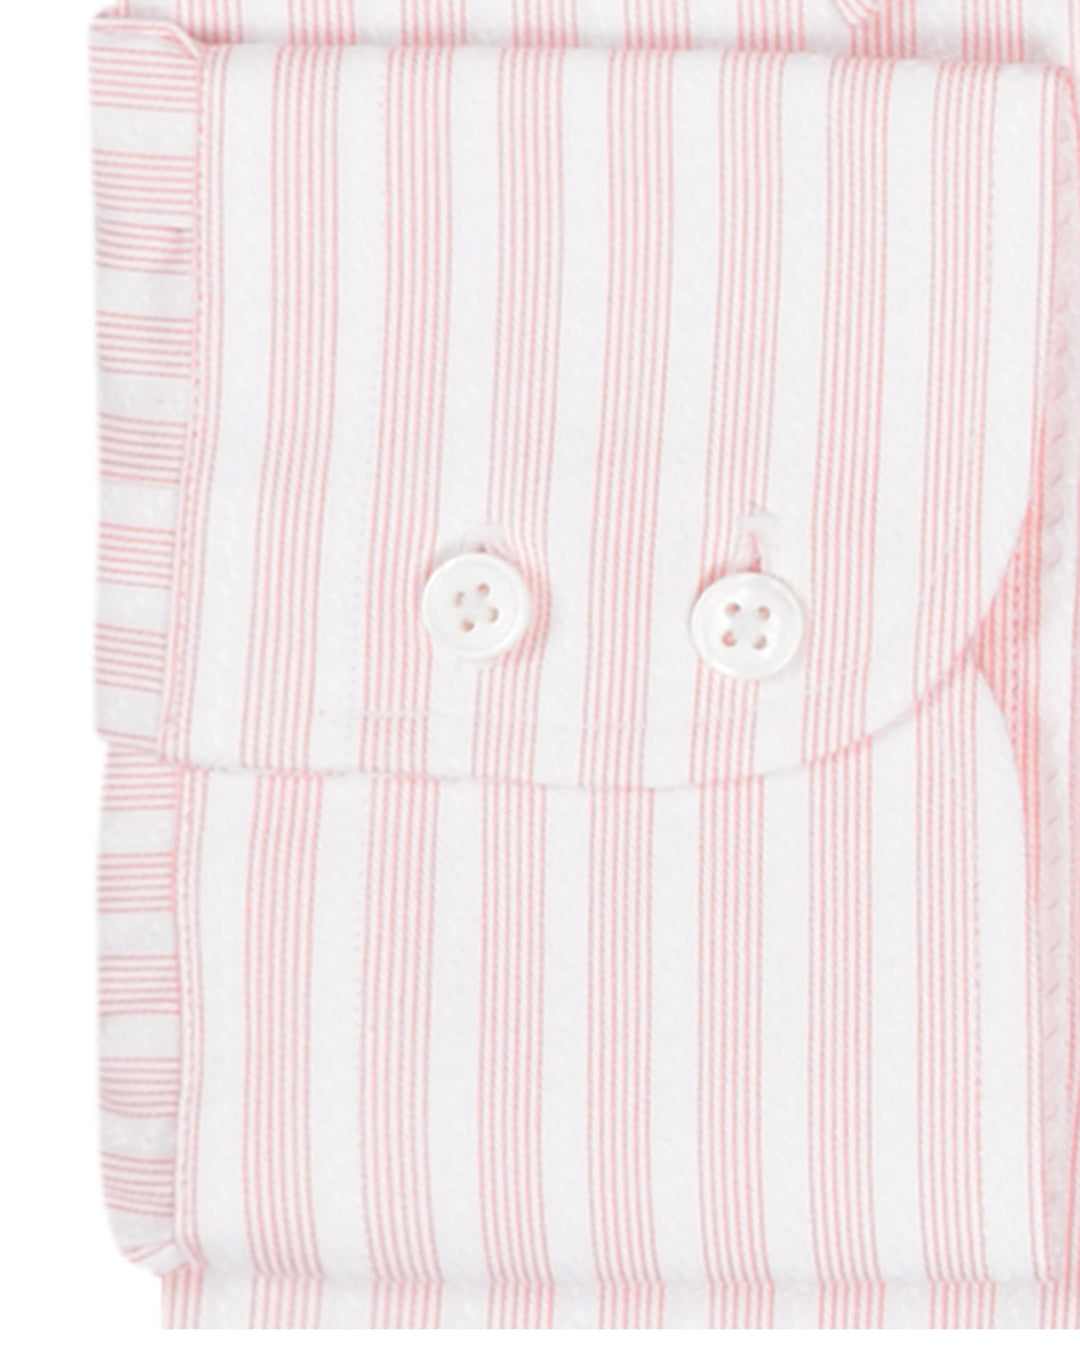 Pink Stripes on Textured White